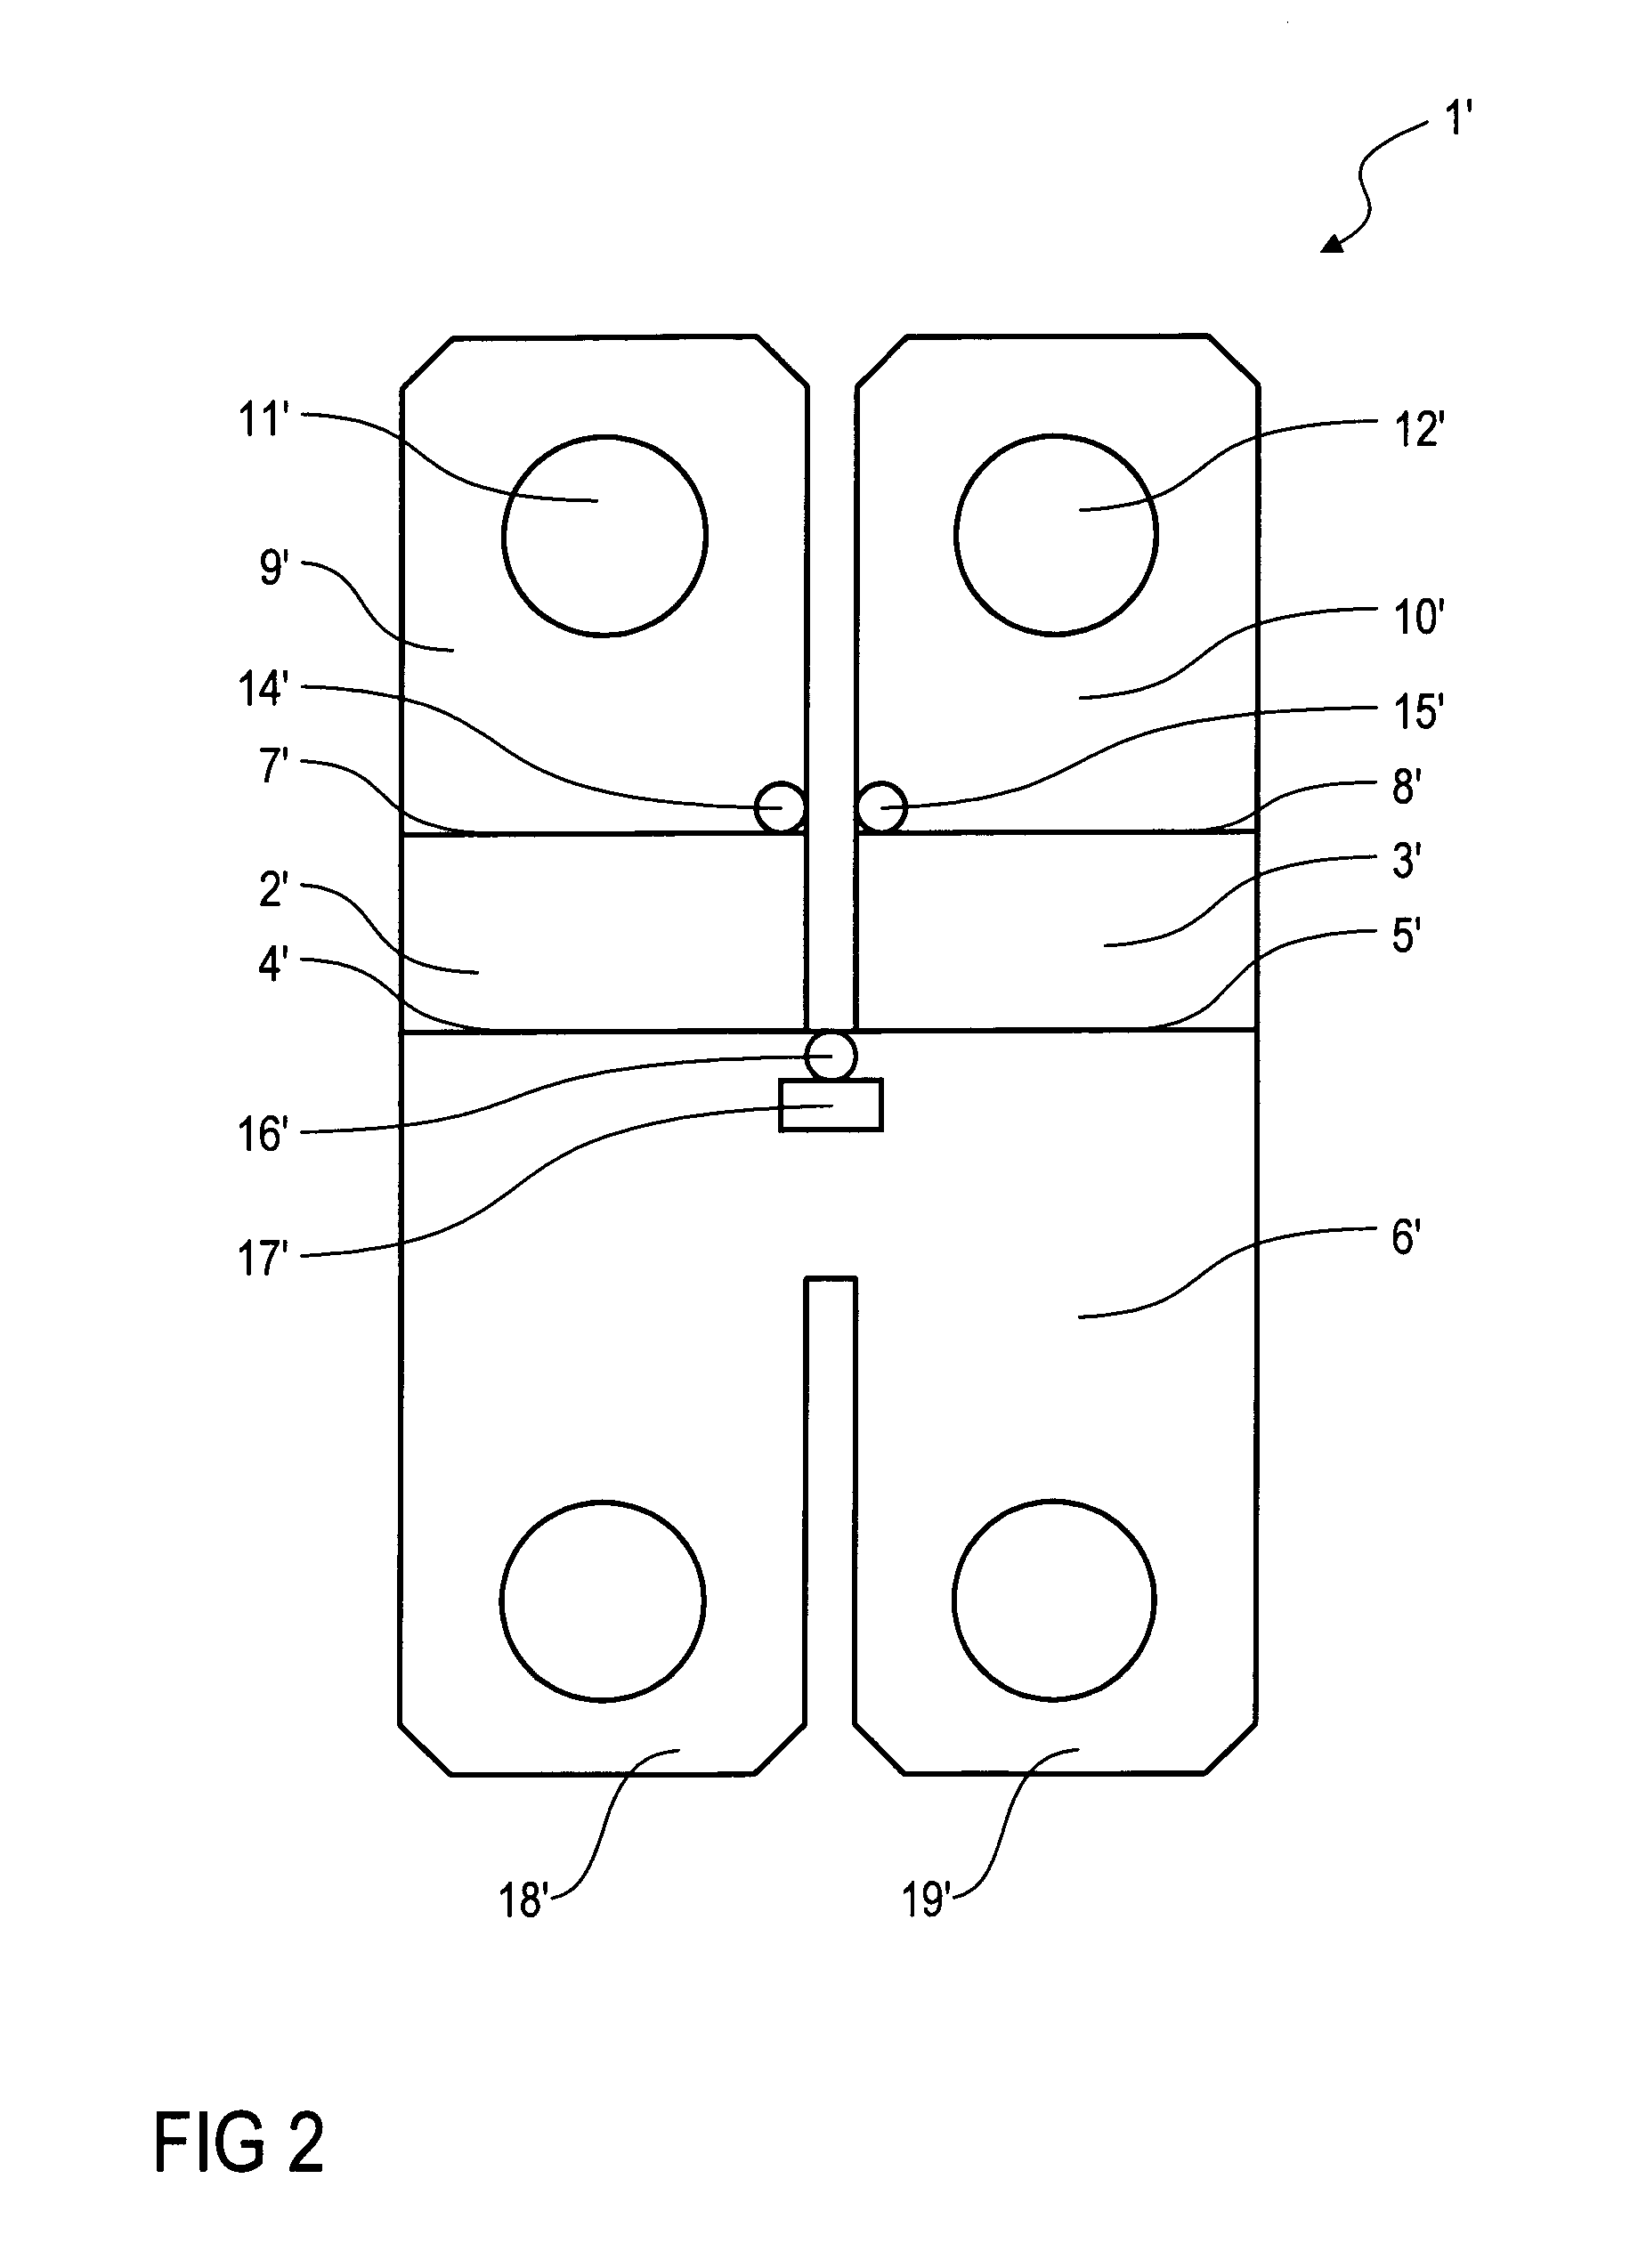 Resistor arrangement, manufacturing method, and measurement circuit